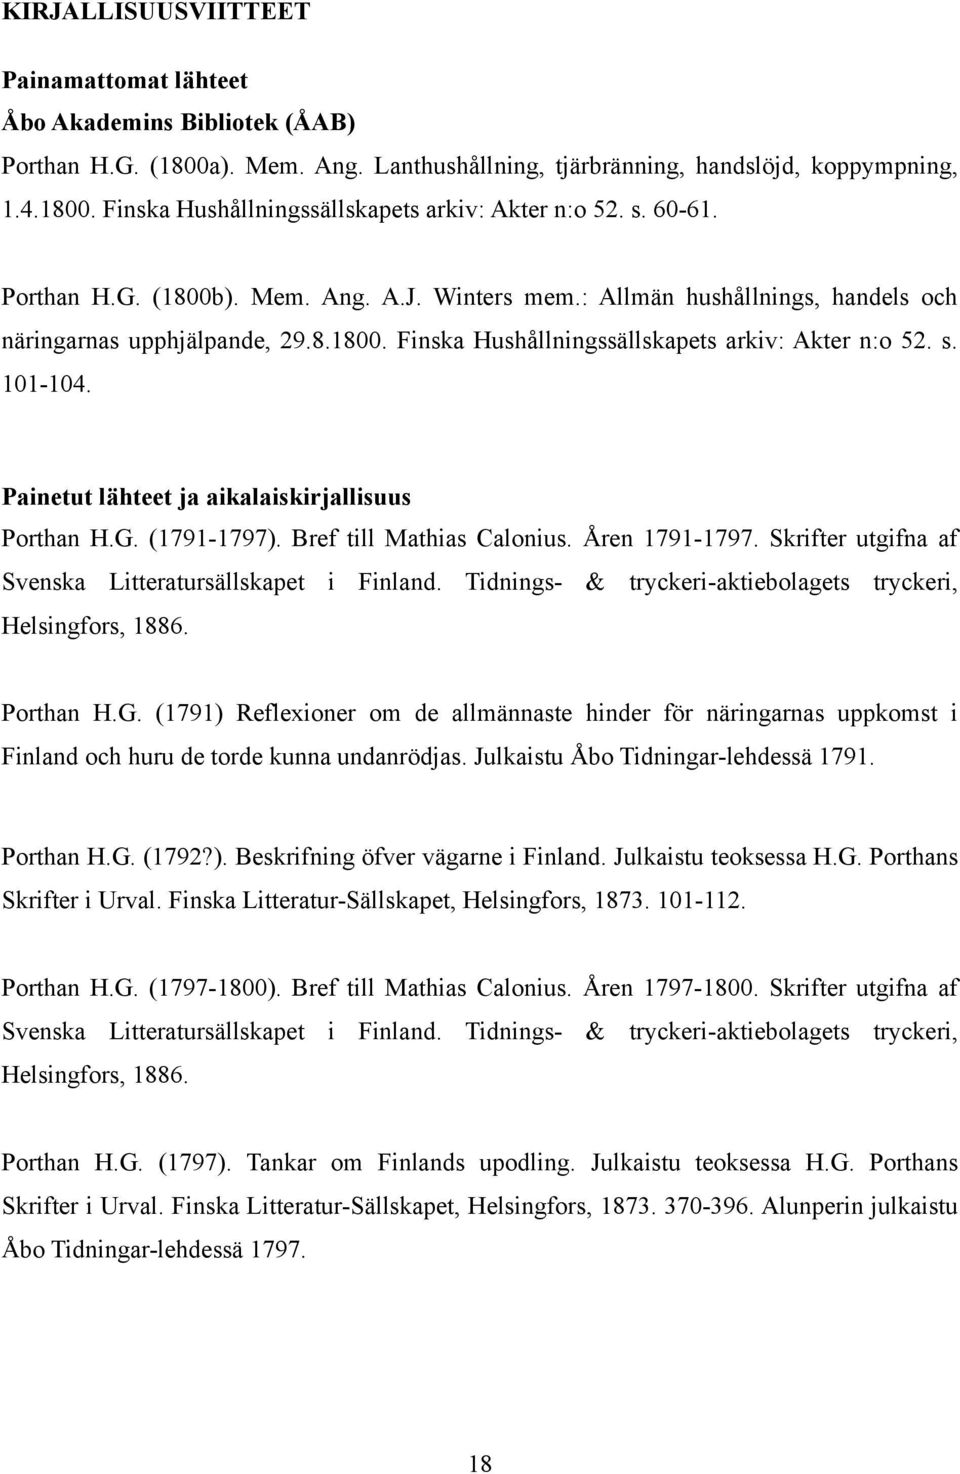 Painetut lähteet ja aikalaiskirjallisuus Porthan H.G. (1791-1797). Bref till Mathias Calonius. Åren 1791-1797. Skrifter utgifna af Svenska Litteratursällskapet i Finland.